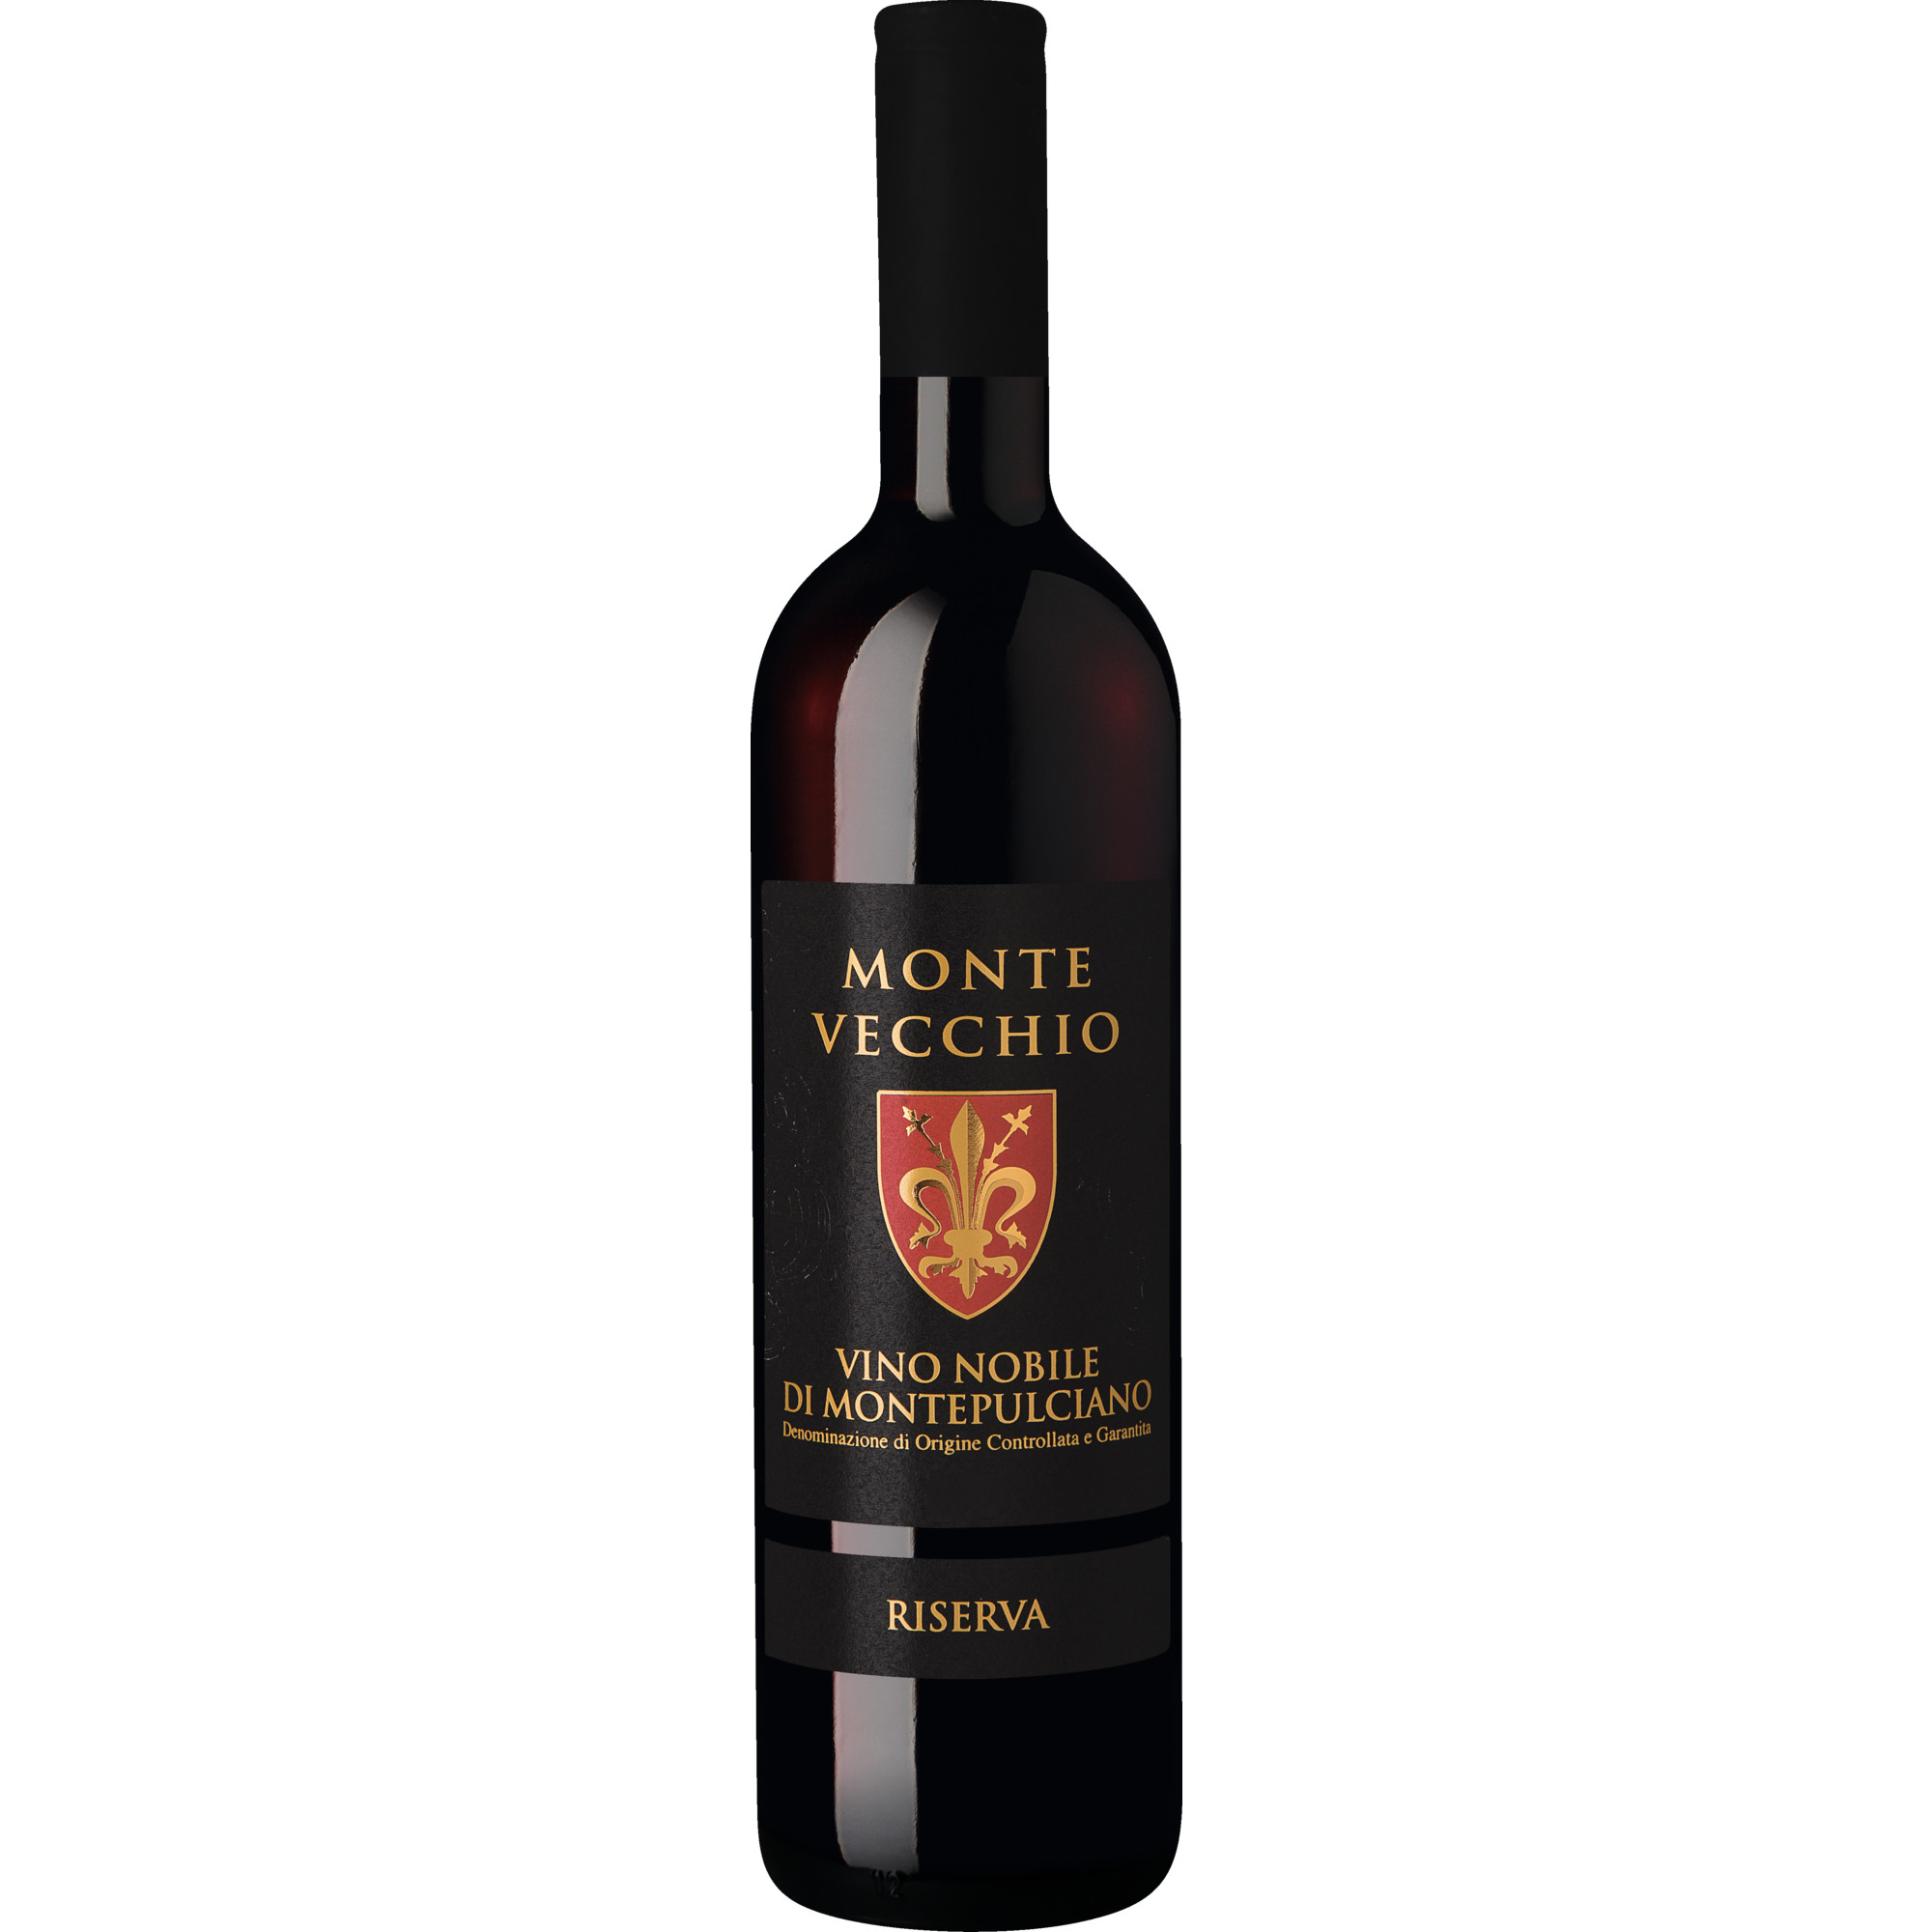 Monte Vecchio Vino Nobile Riserva, Vino Nobile di Montepulciano DOCG Riserva, Toskana, 2016, Rotwein  Rotwein Hawesko